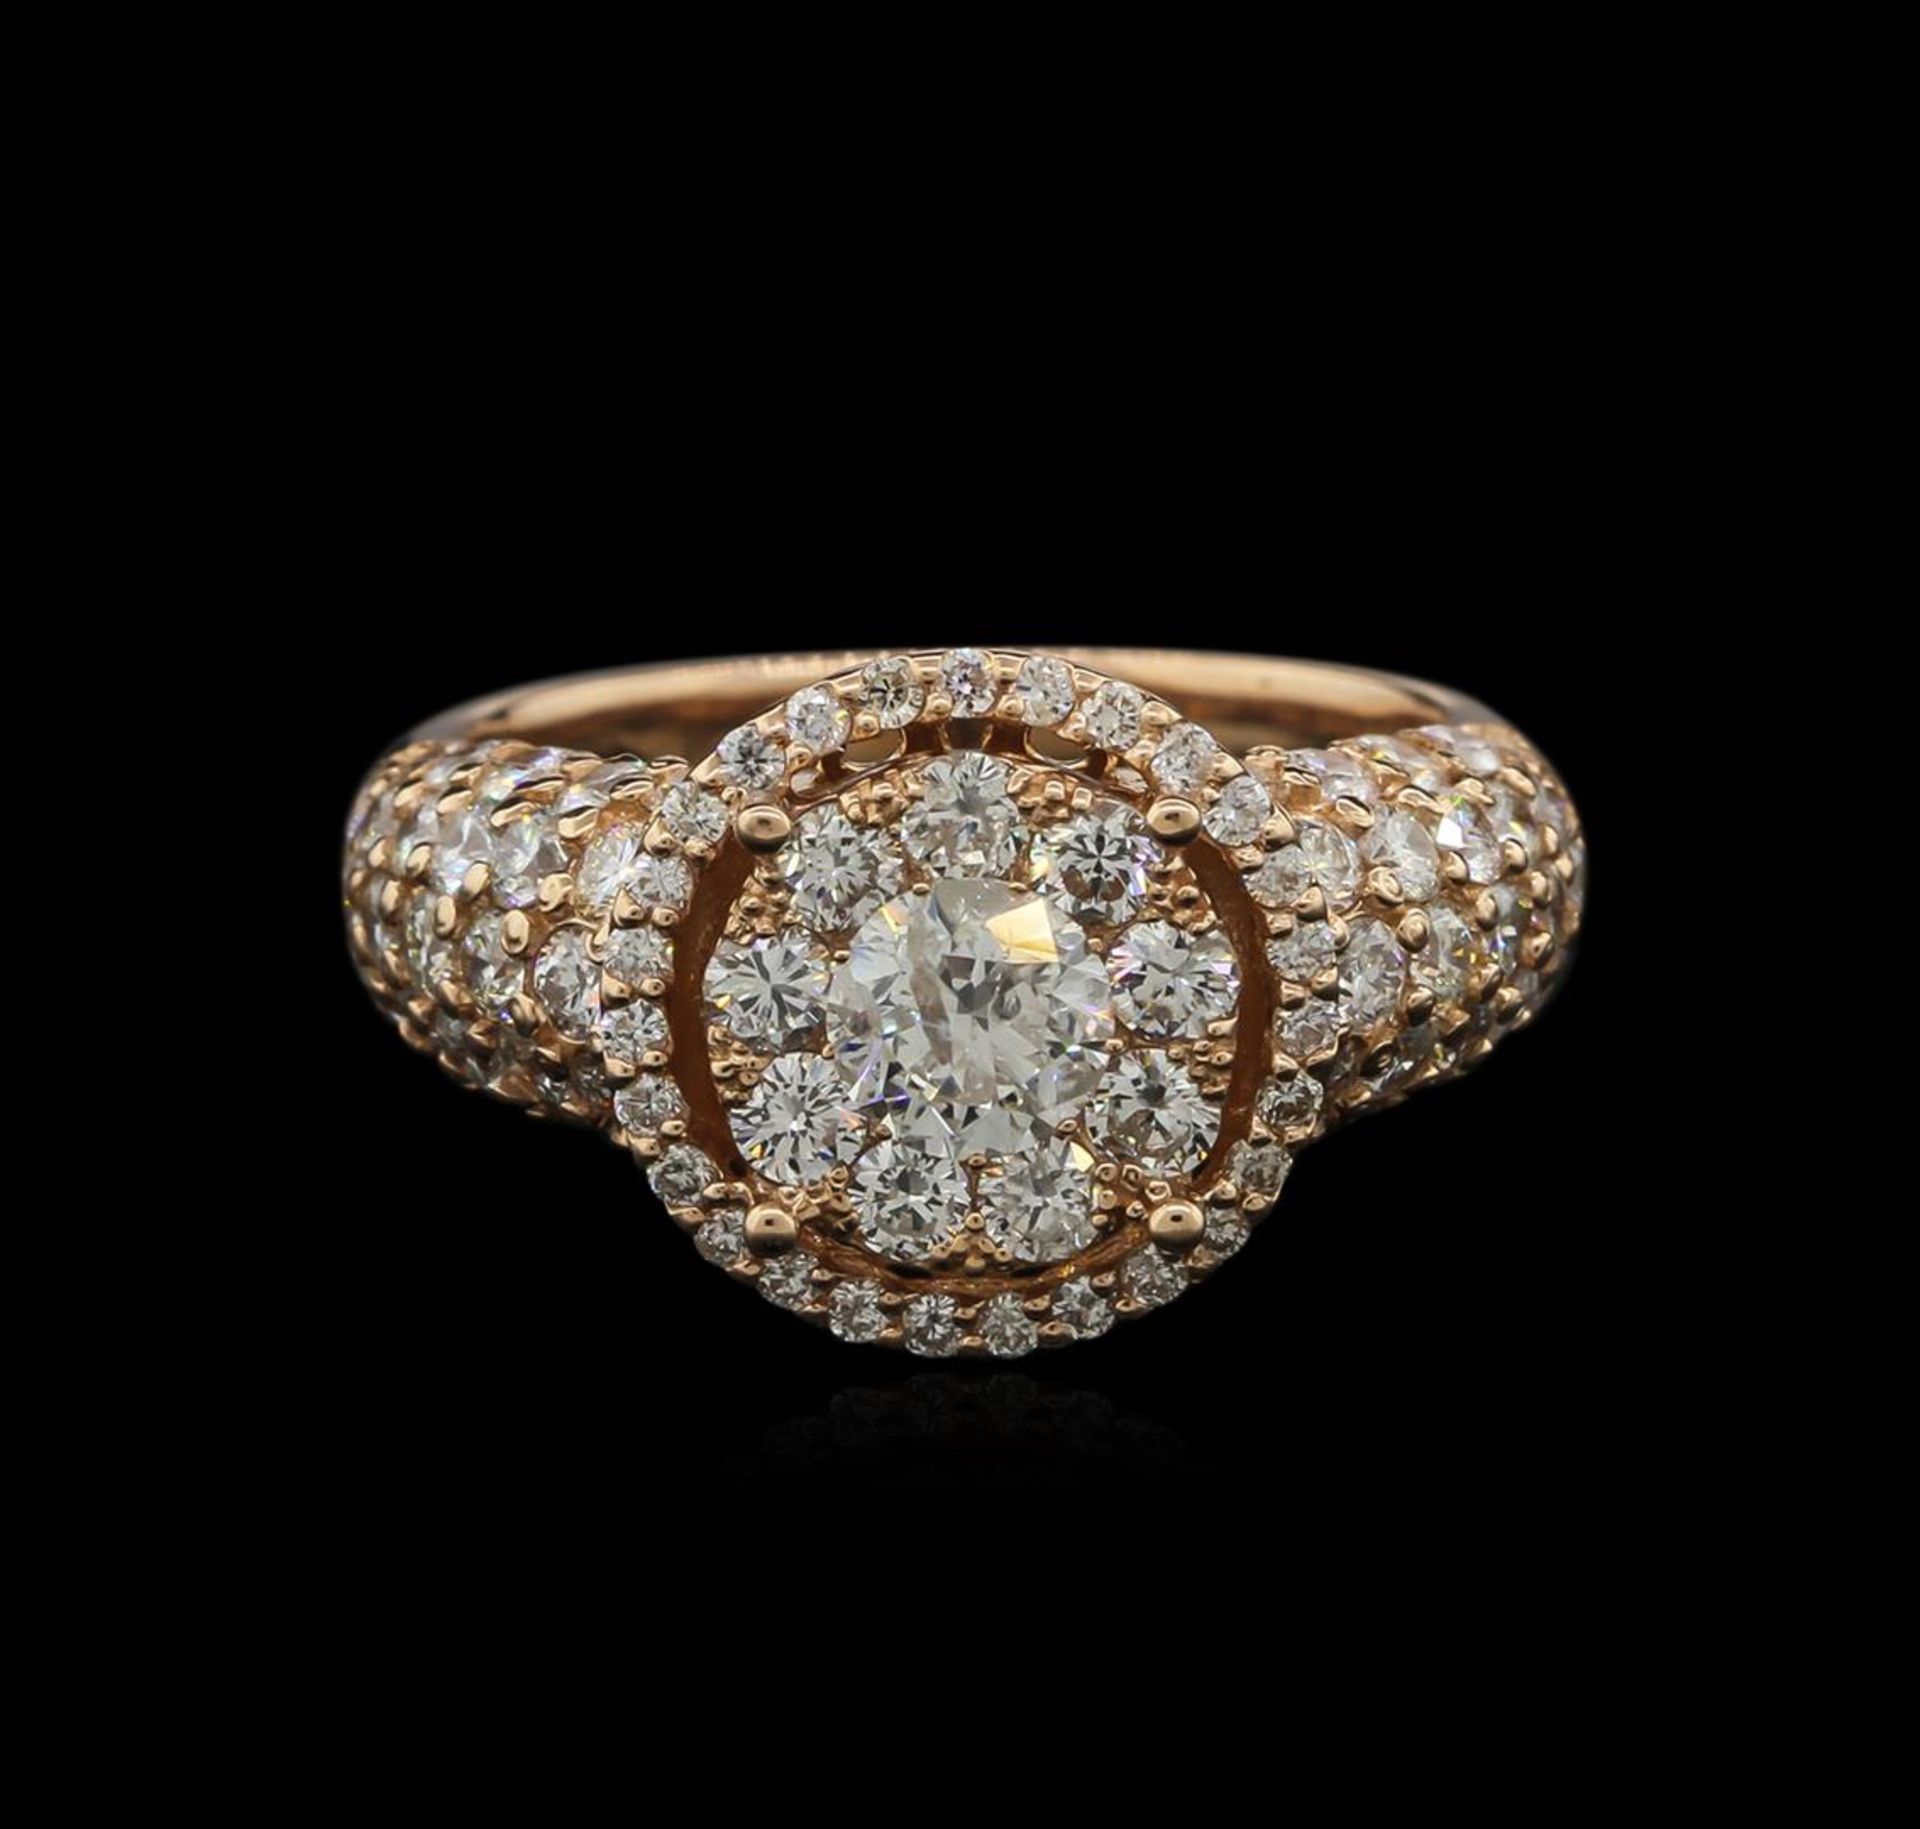 3.01 ctw Diamond Ring - 14KT Rose Gold - Image 2 of 3